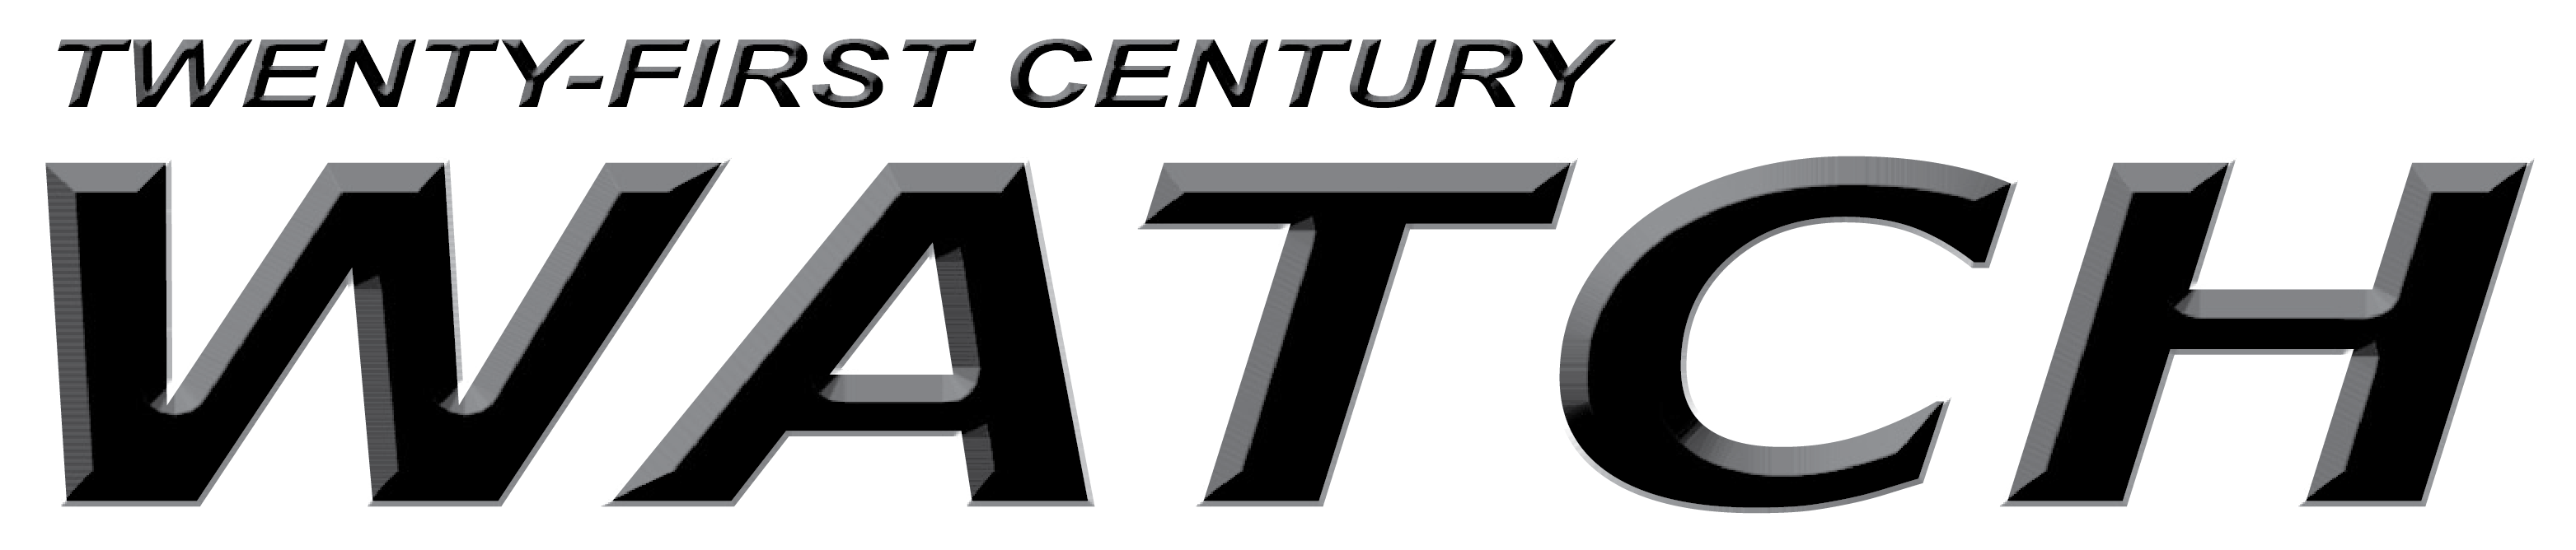 Century Watch Logo - Home